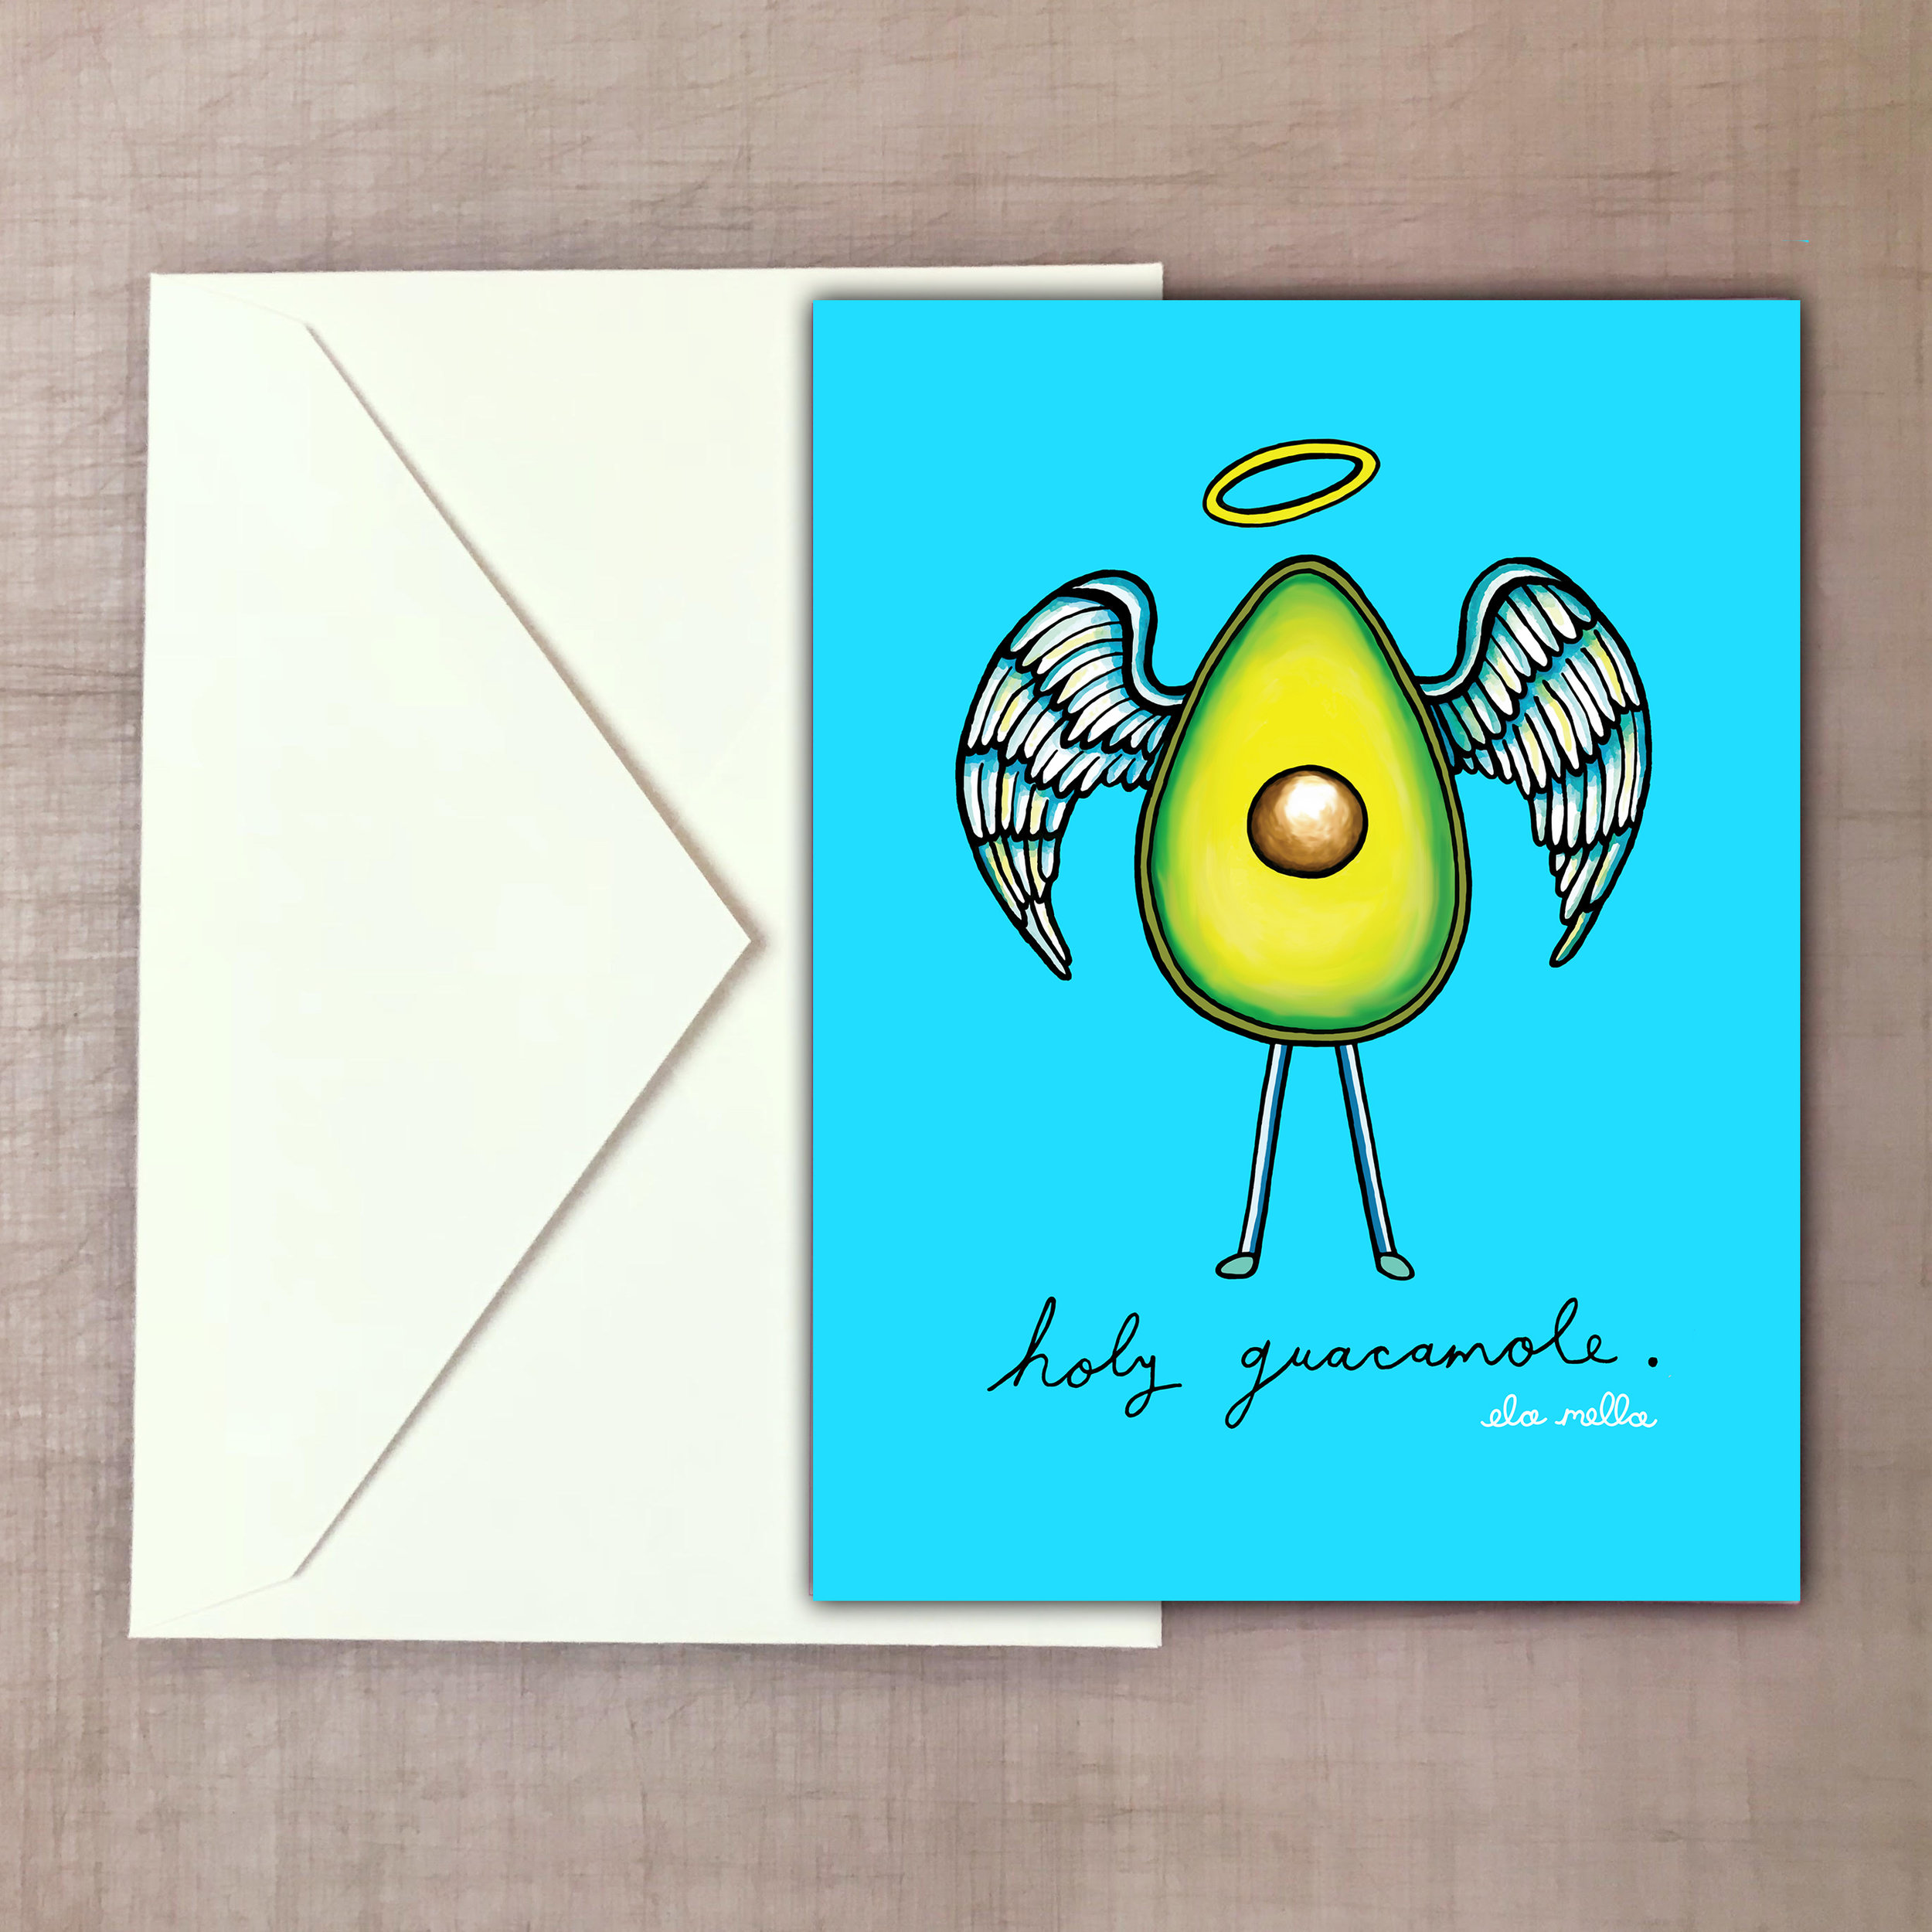 Holy Guacamole Greeting Card.jpg